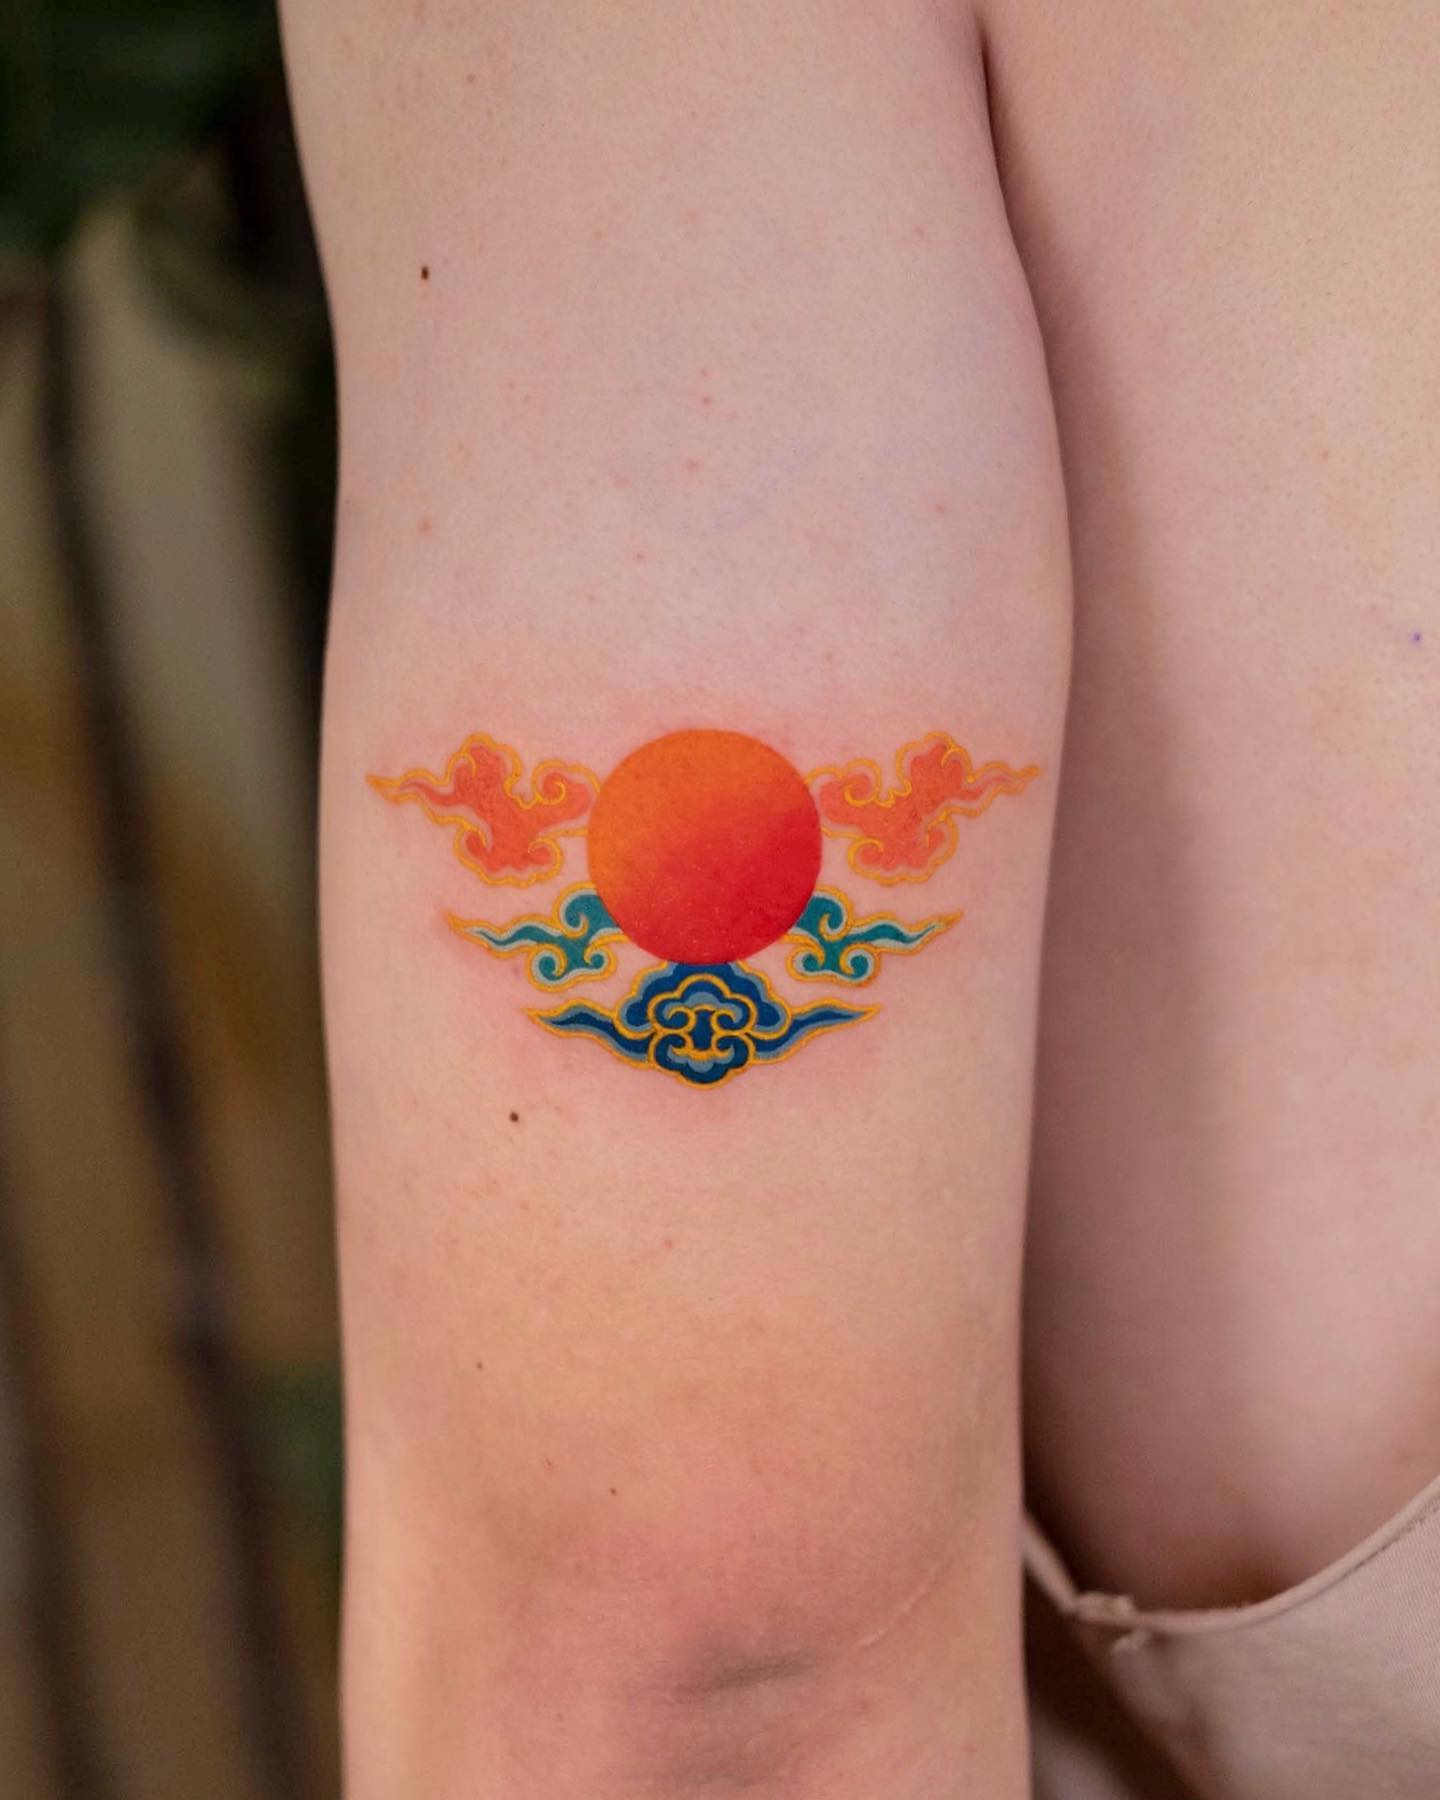 Orange Sun with Blue Clouds Tattoo on Arm